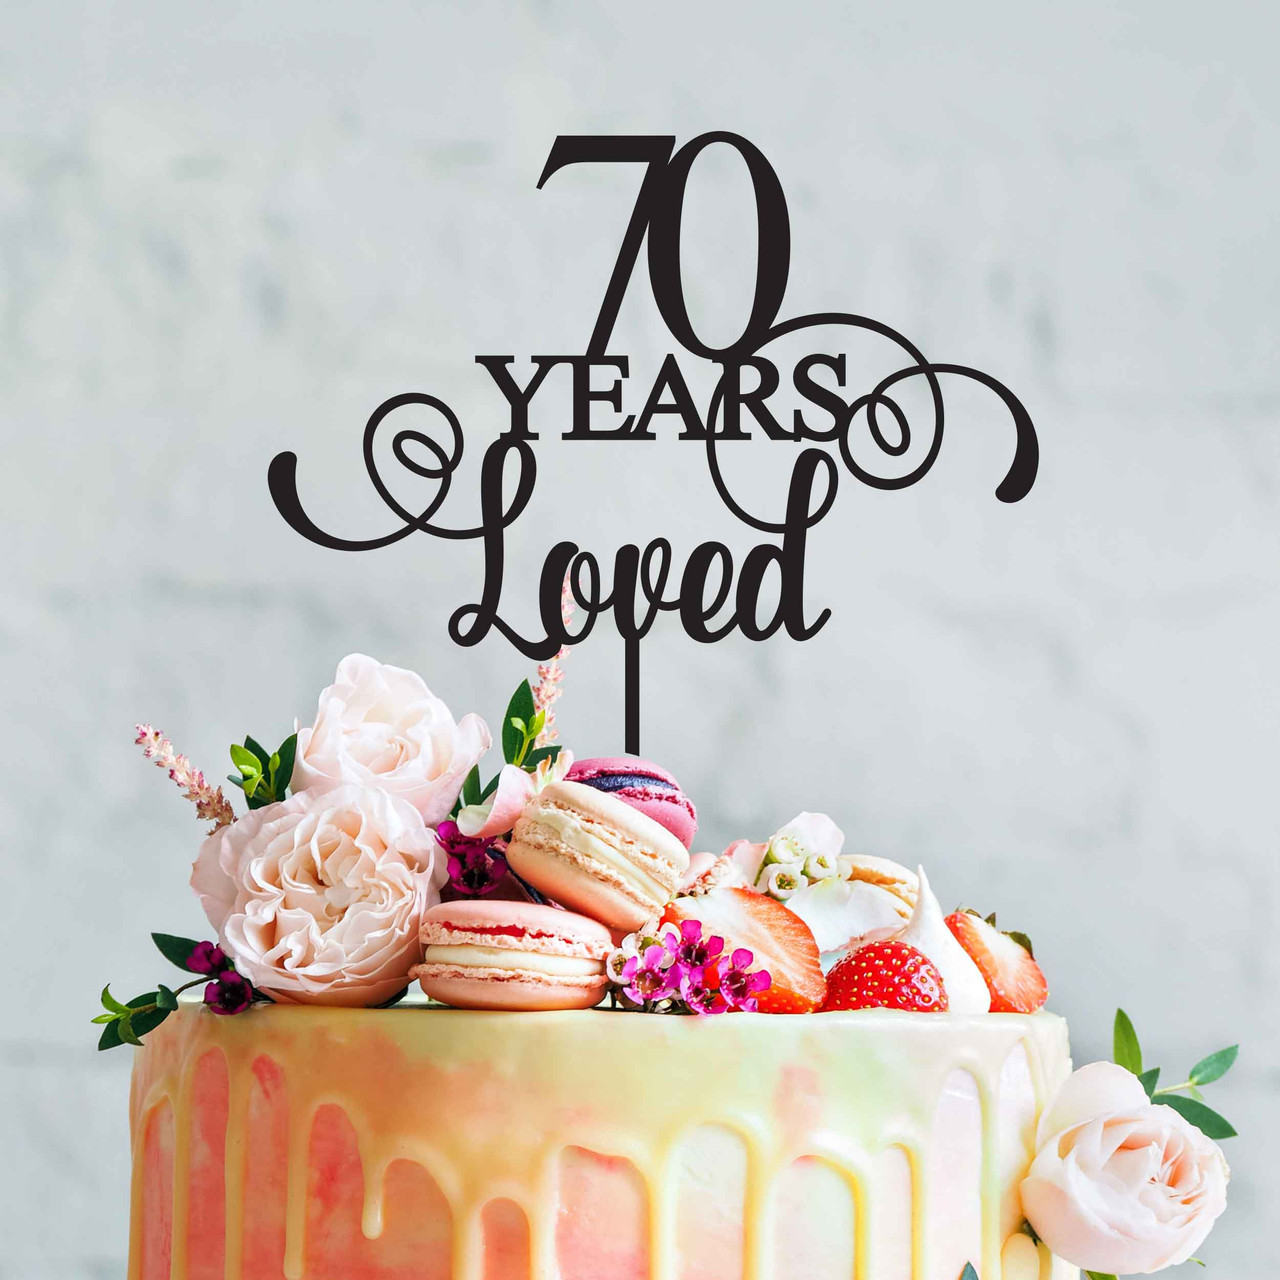 70th Wedding Anniversary cake - Decorated Cake by My Cake - CakesDecor